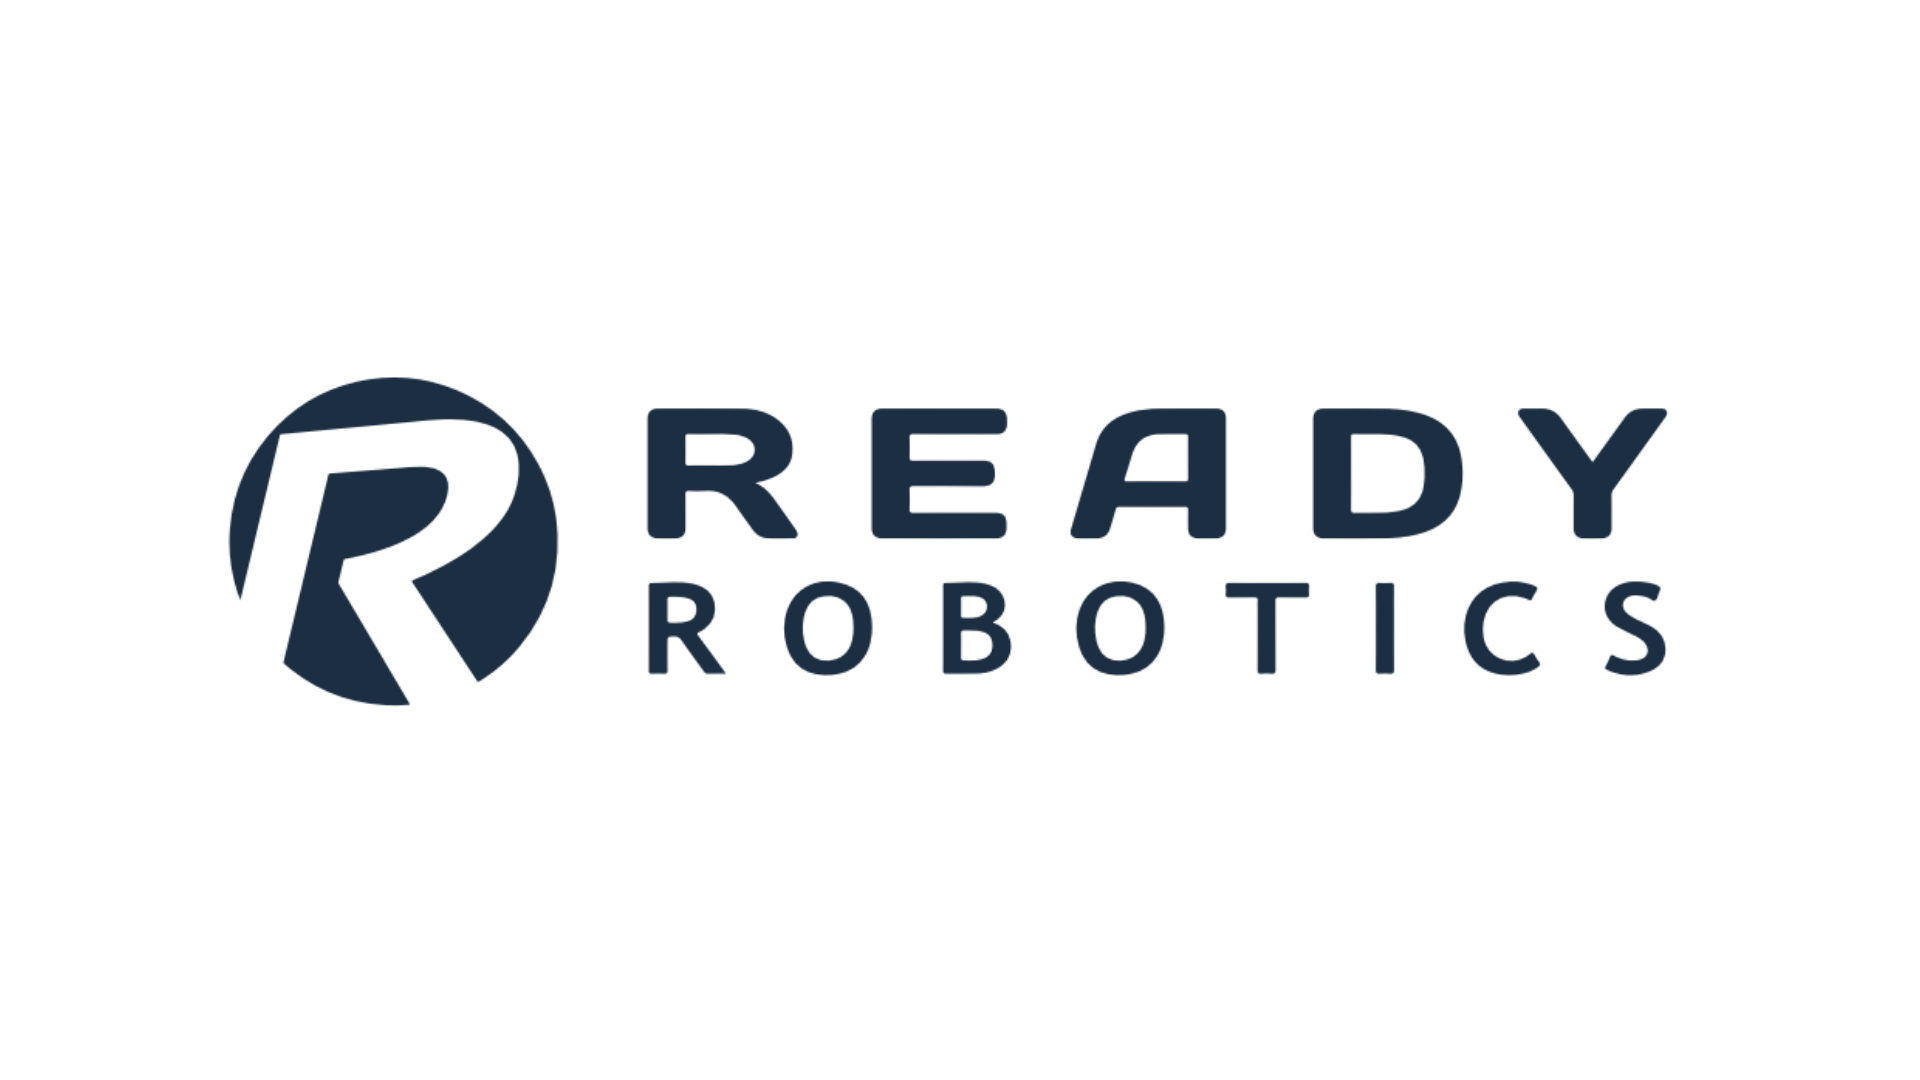 READY Robotics